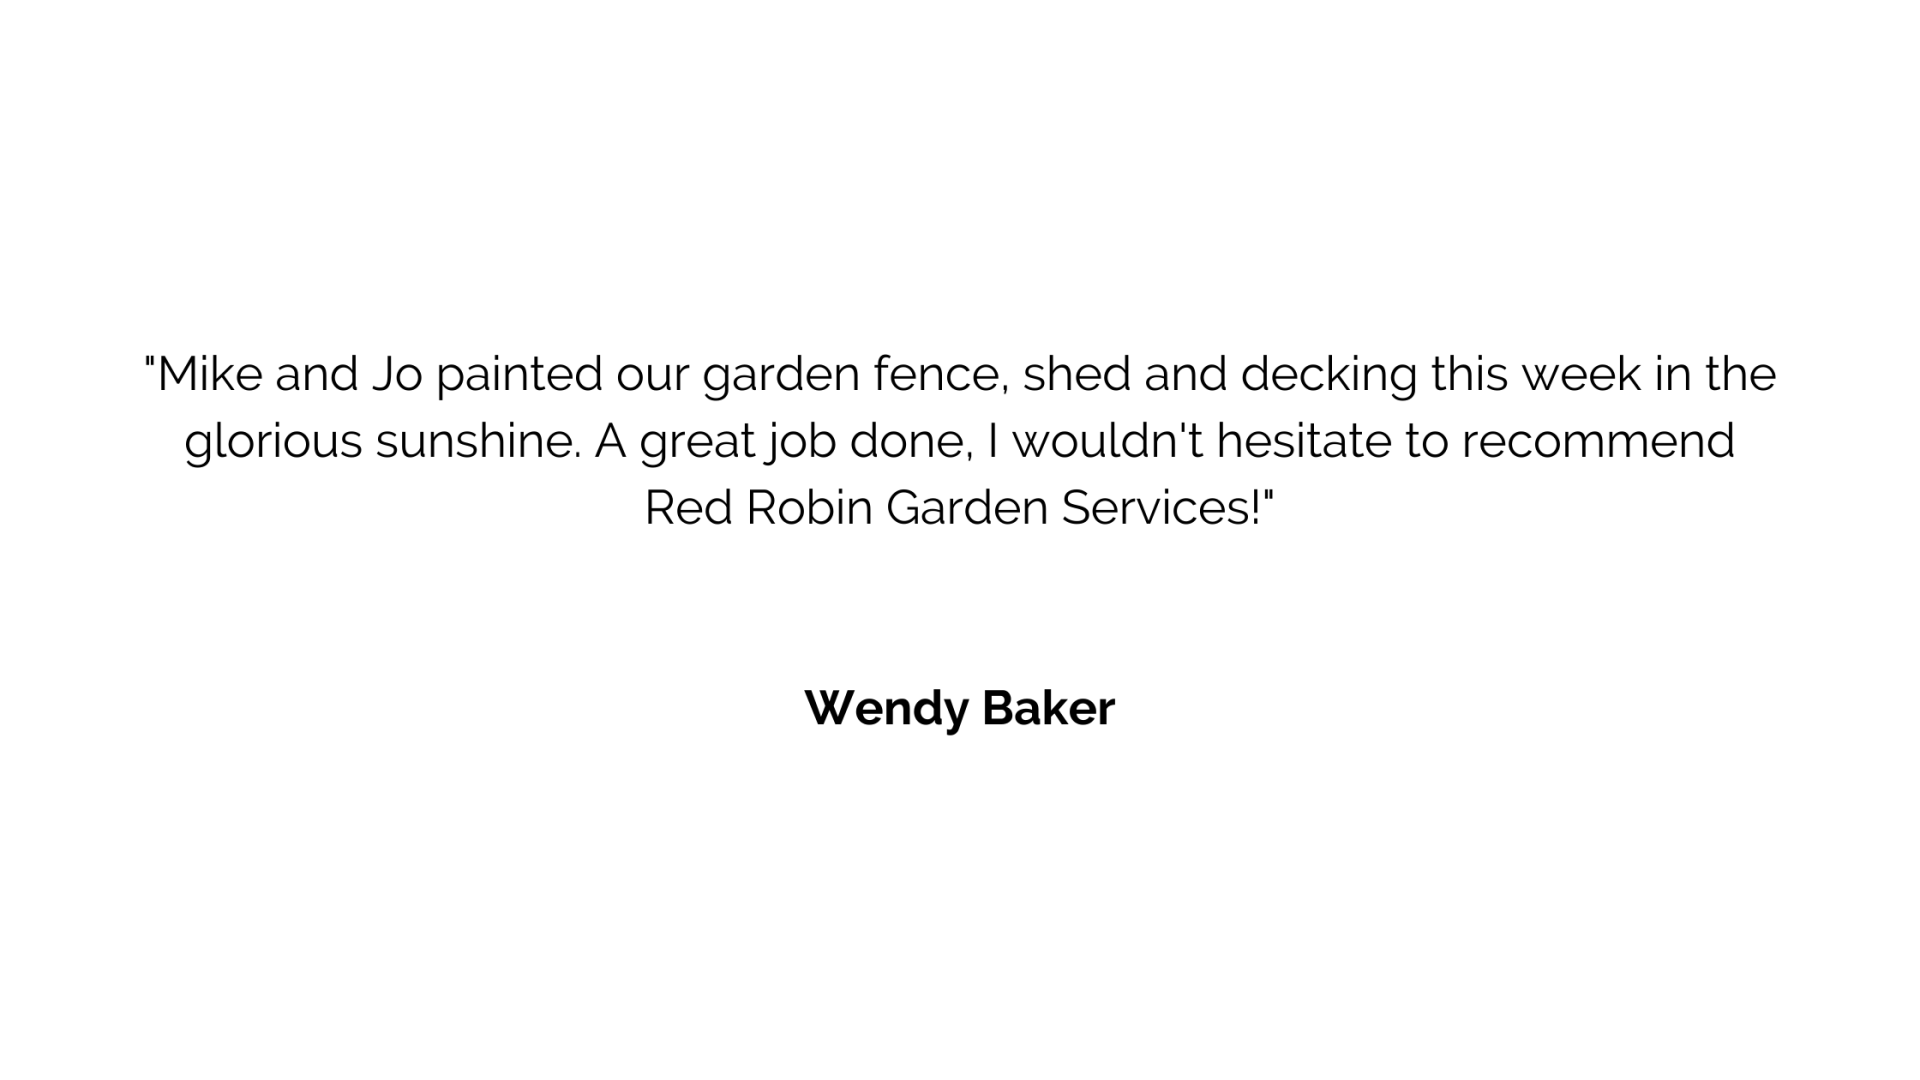 Wendy Baker